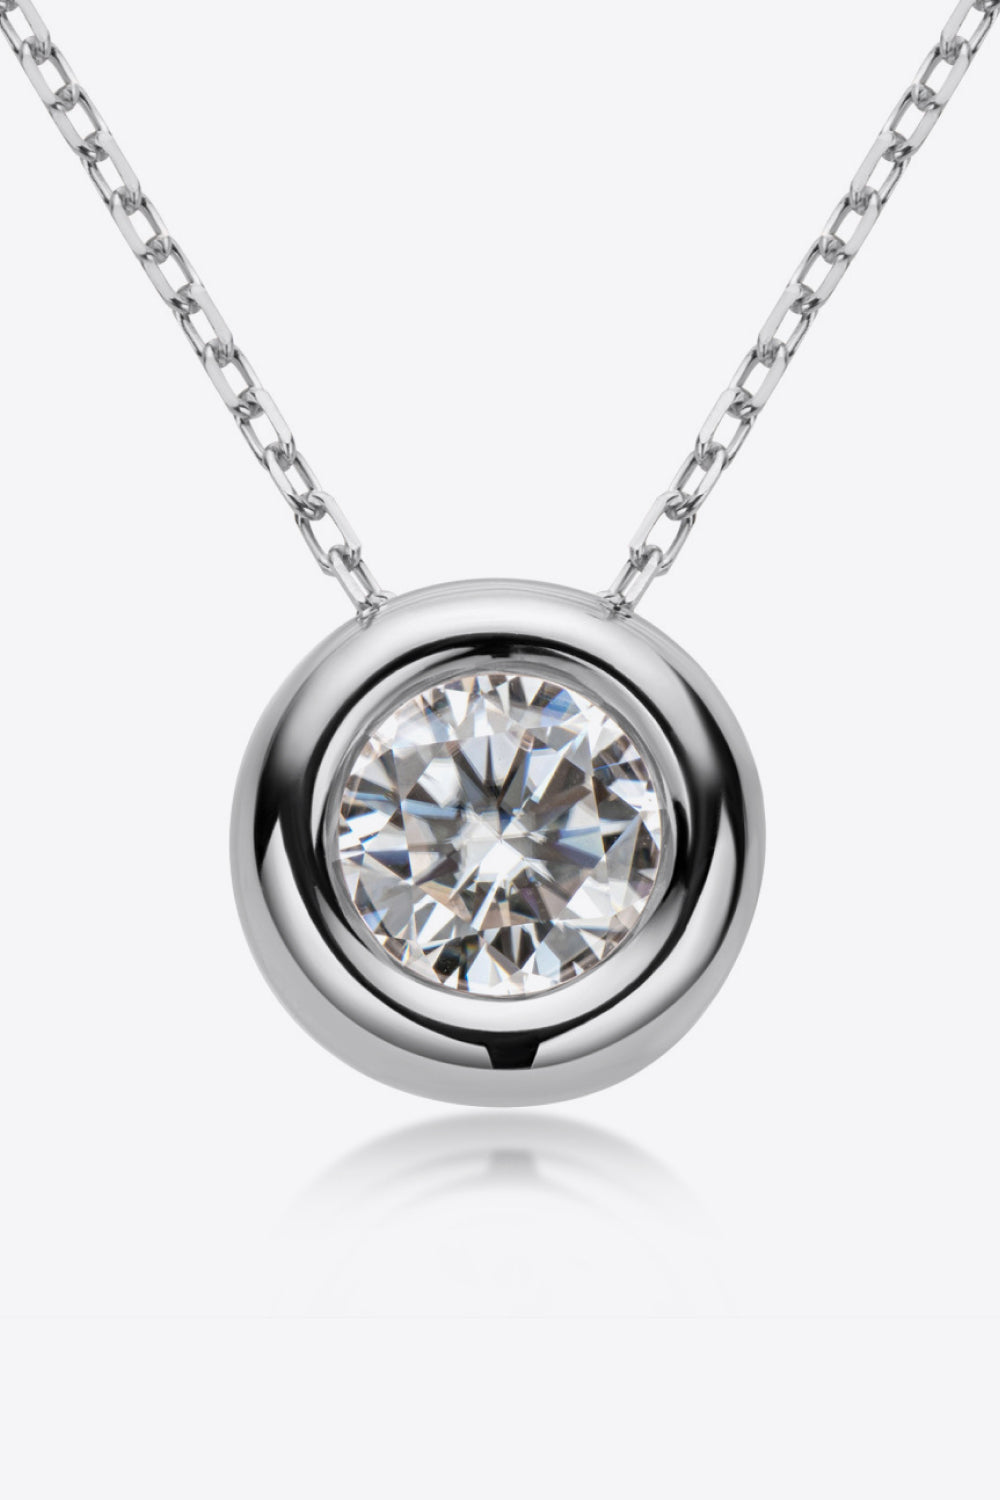 Women’s 1 Carat Moissanite Pendant 925 Sterling Silver Necklace